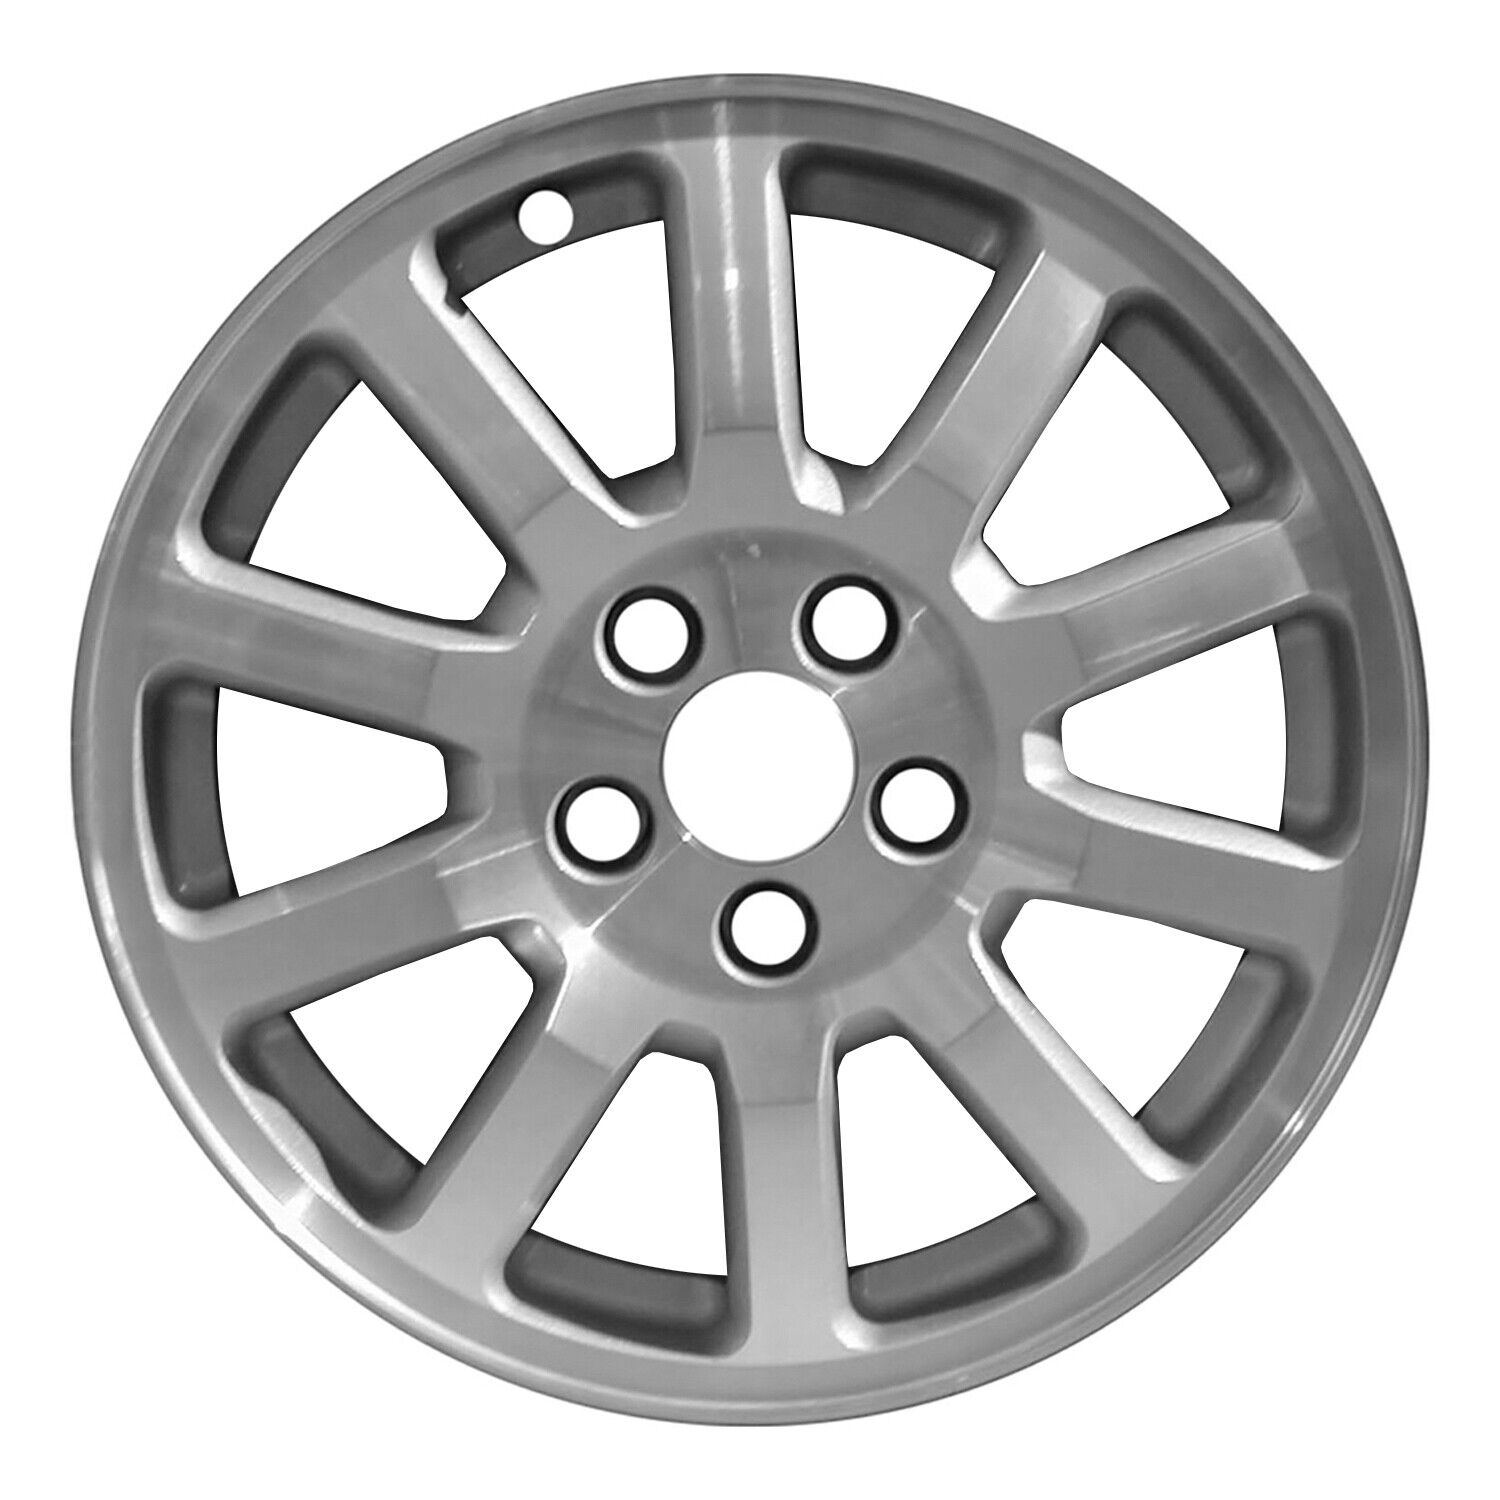 04063 Reconditioned OEM Aluminum Wheel 17x6.5 fits 2005-2007 Buick Rendezvous